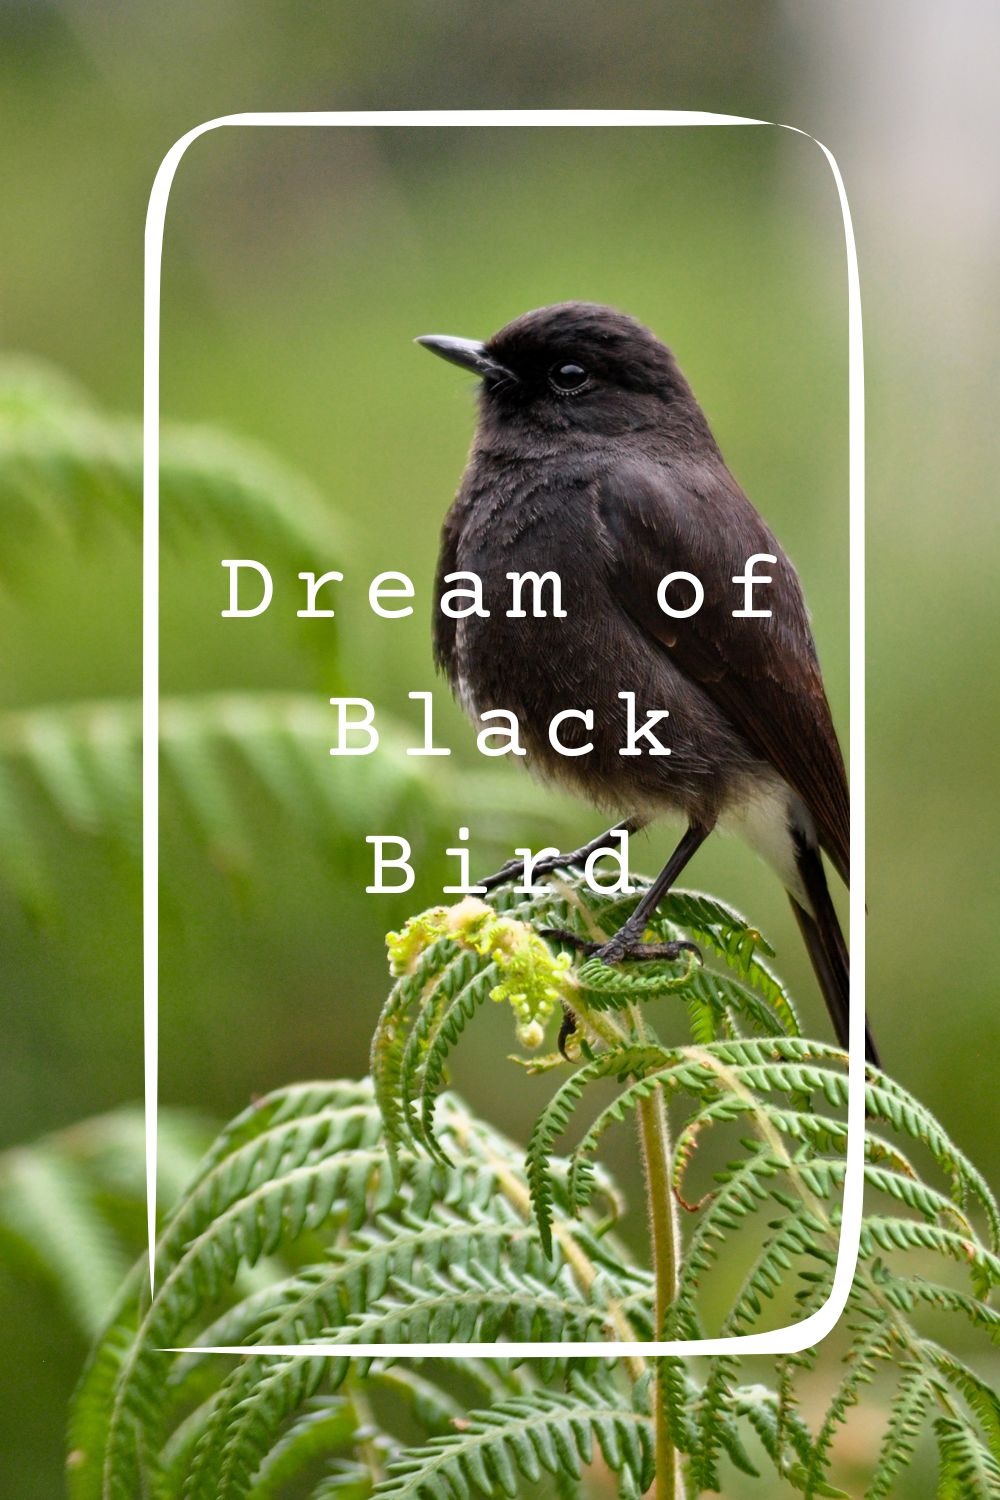 11 Dream of Black Bird Meanings1